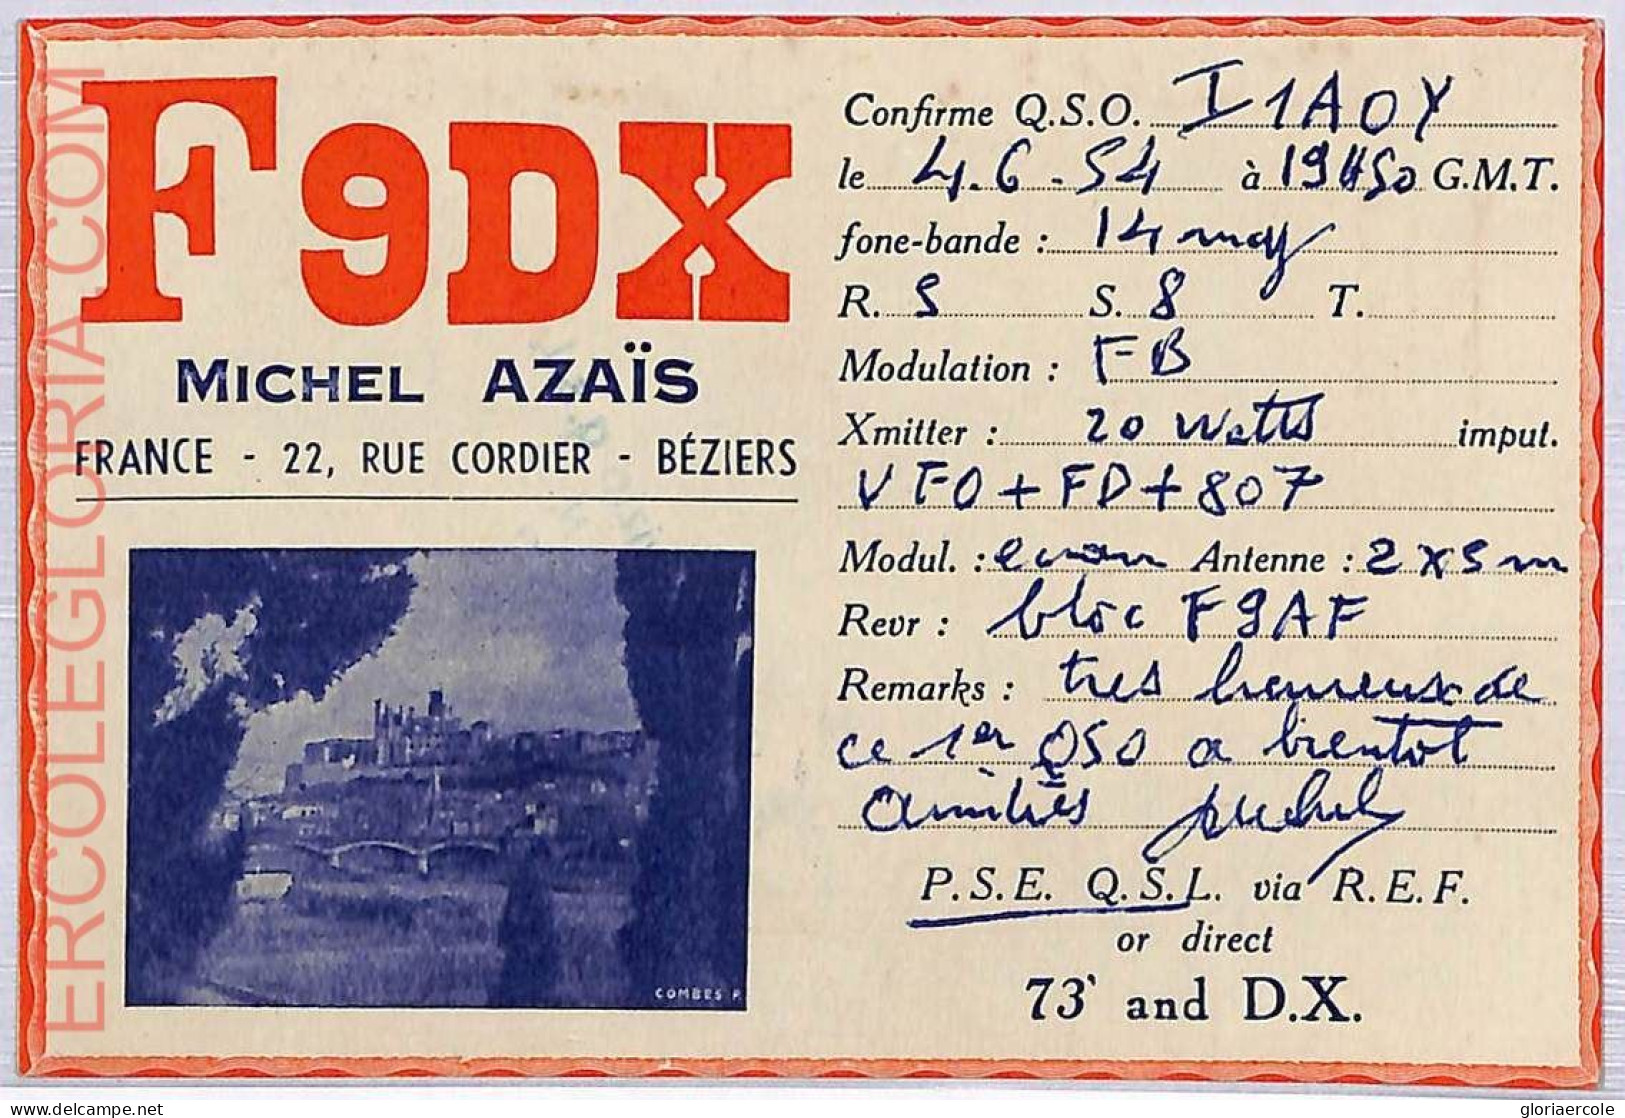 Ad9061 - FRANCE - RADIO FREQUENCY CARD   - 1954 - Radio